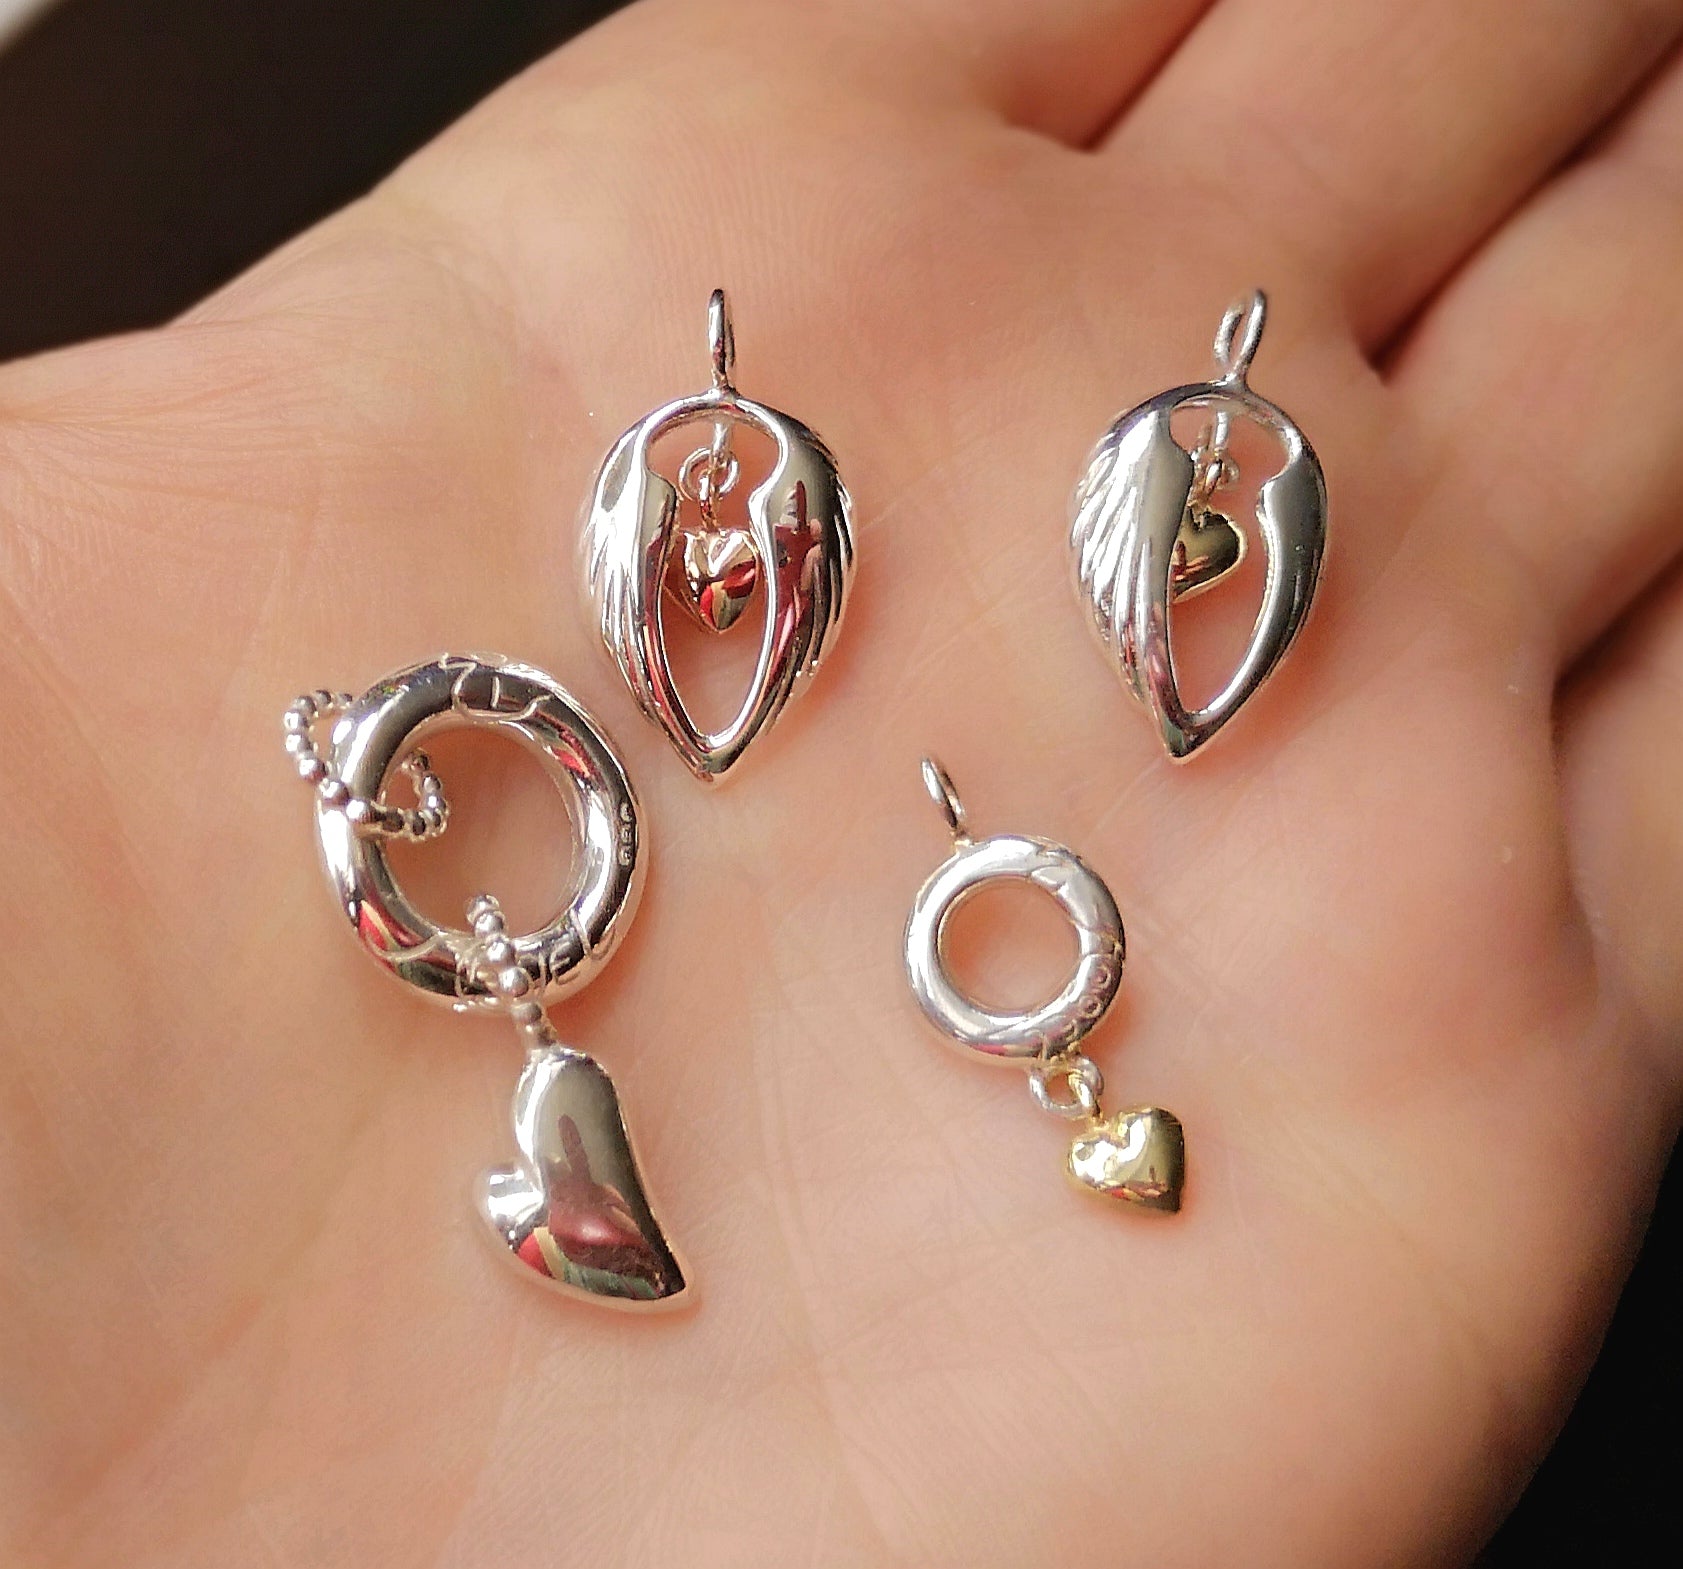 The Angel halo and heart pendant alongside similar sterling silver angel pendants.